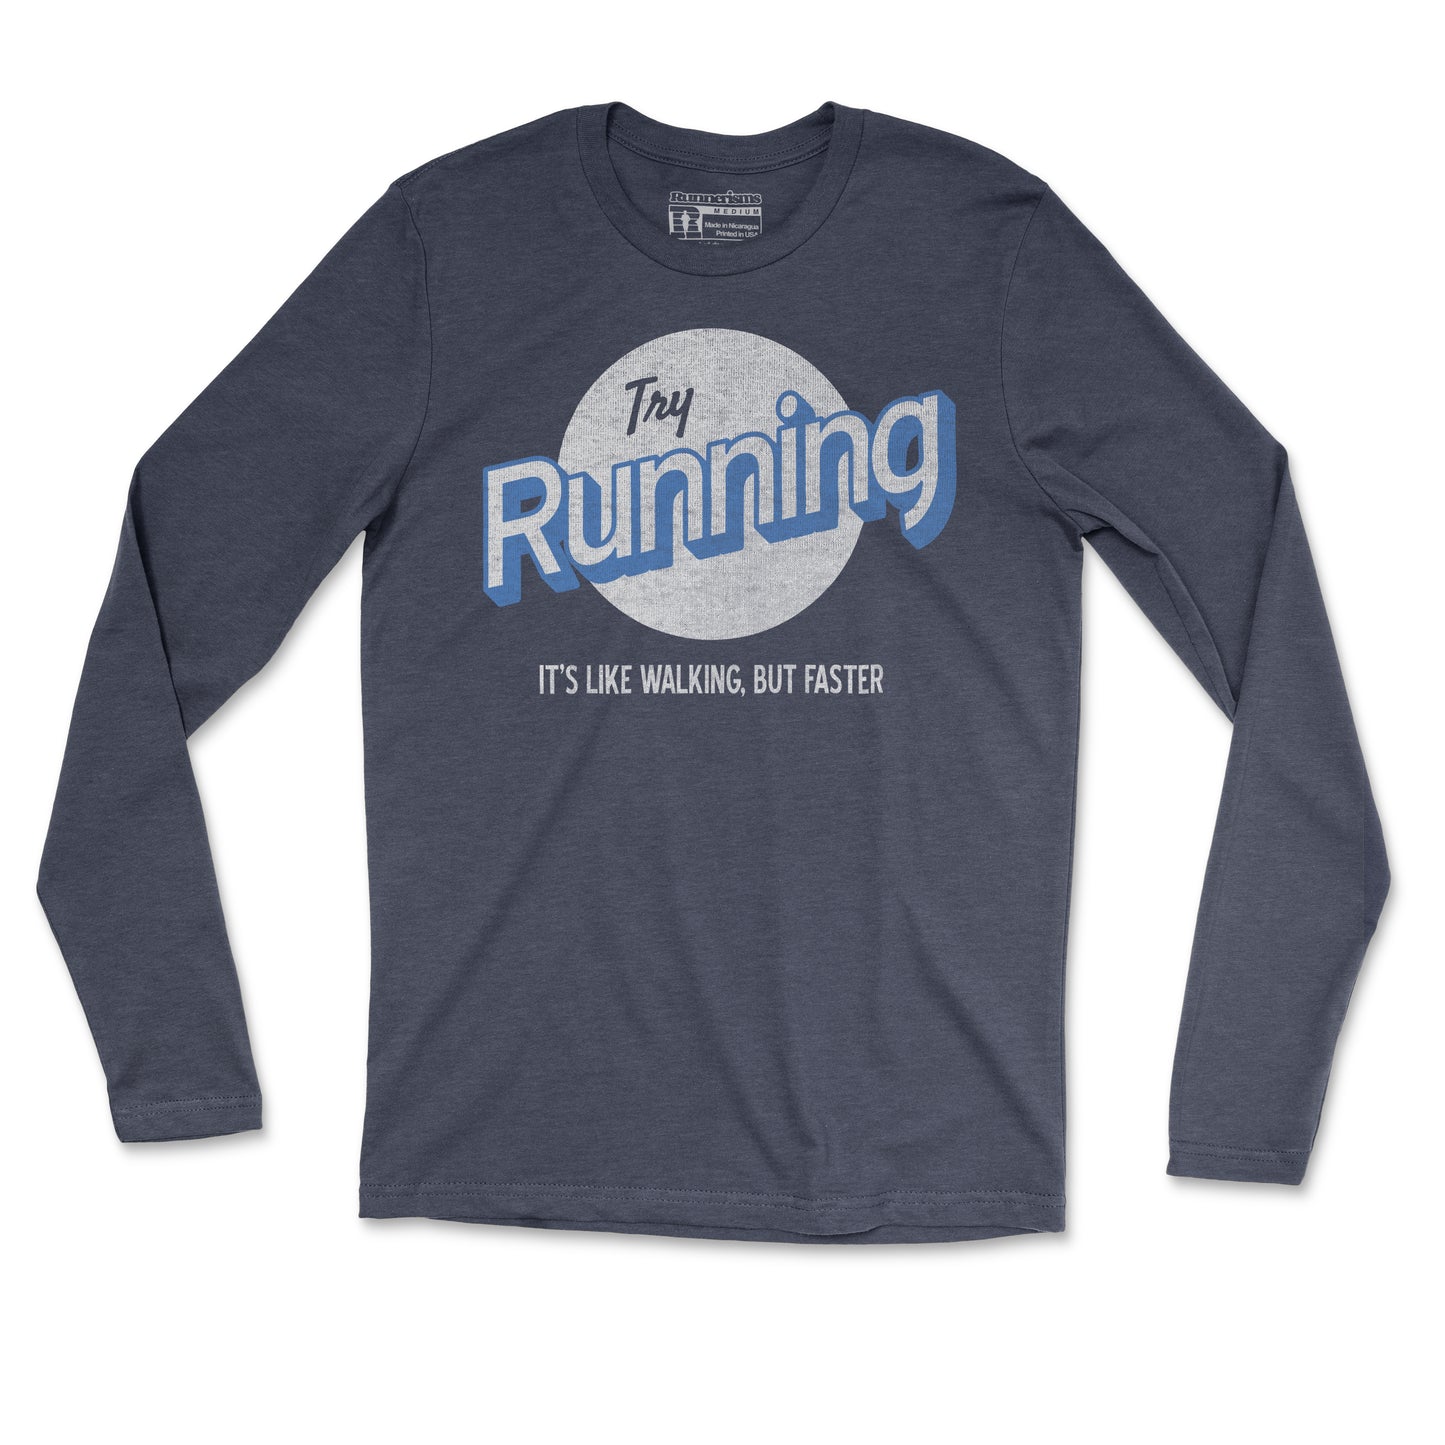 Try Running It's Like Walking But Faster - Unisex Long Sleeve T Shirt